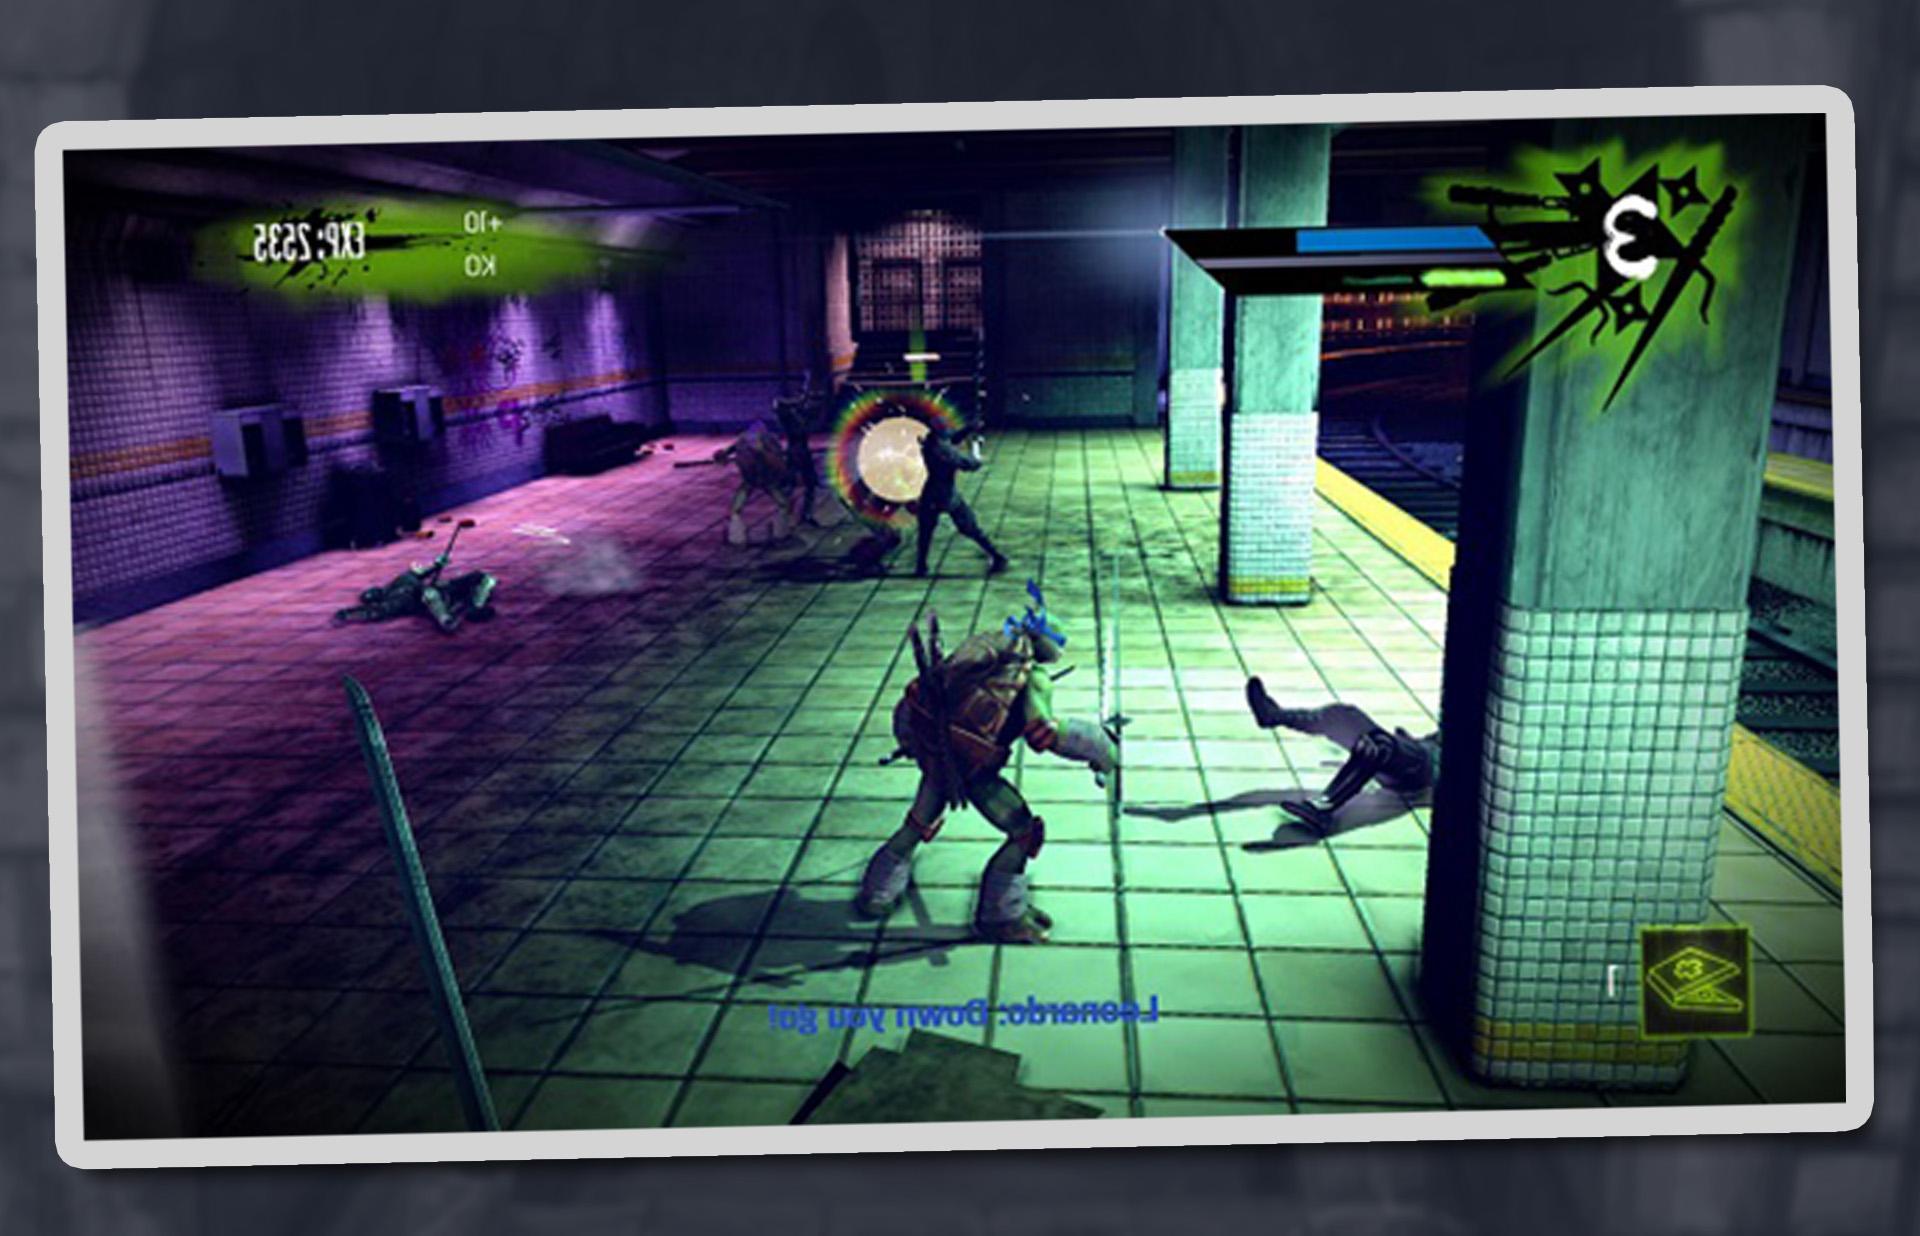 Screenshot 1 of Ninja avventura tartaruga PSI-40